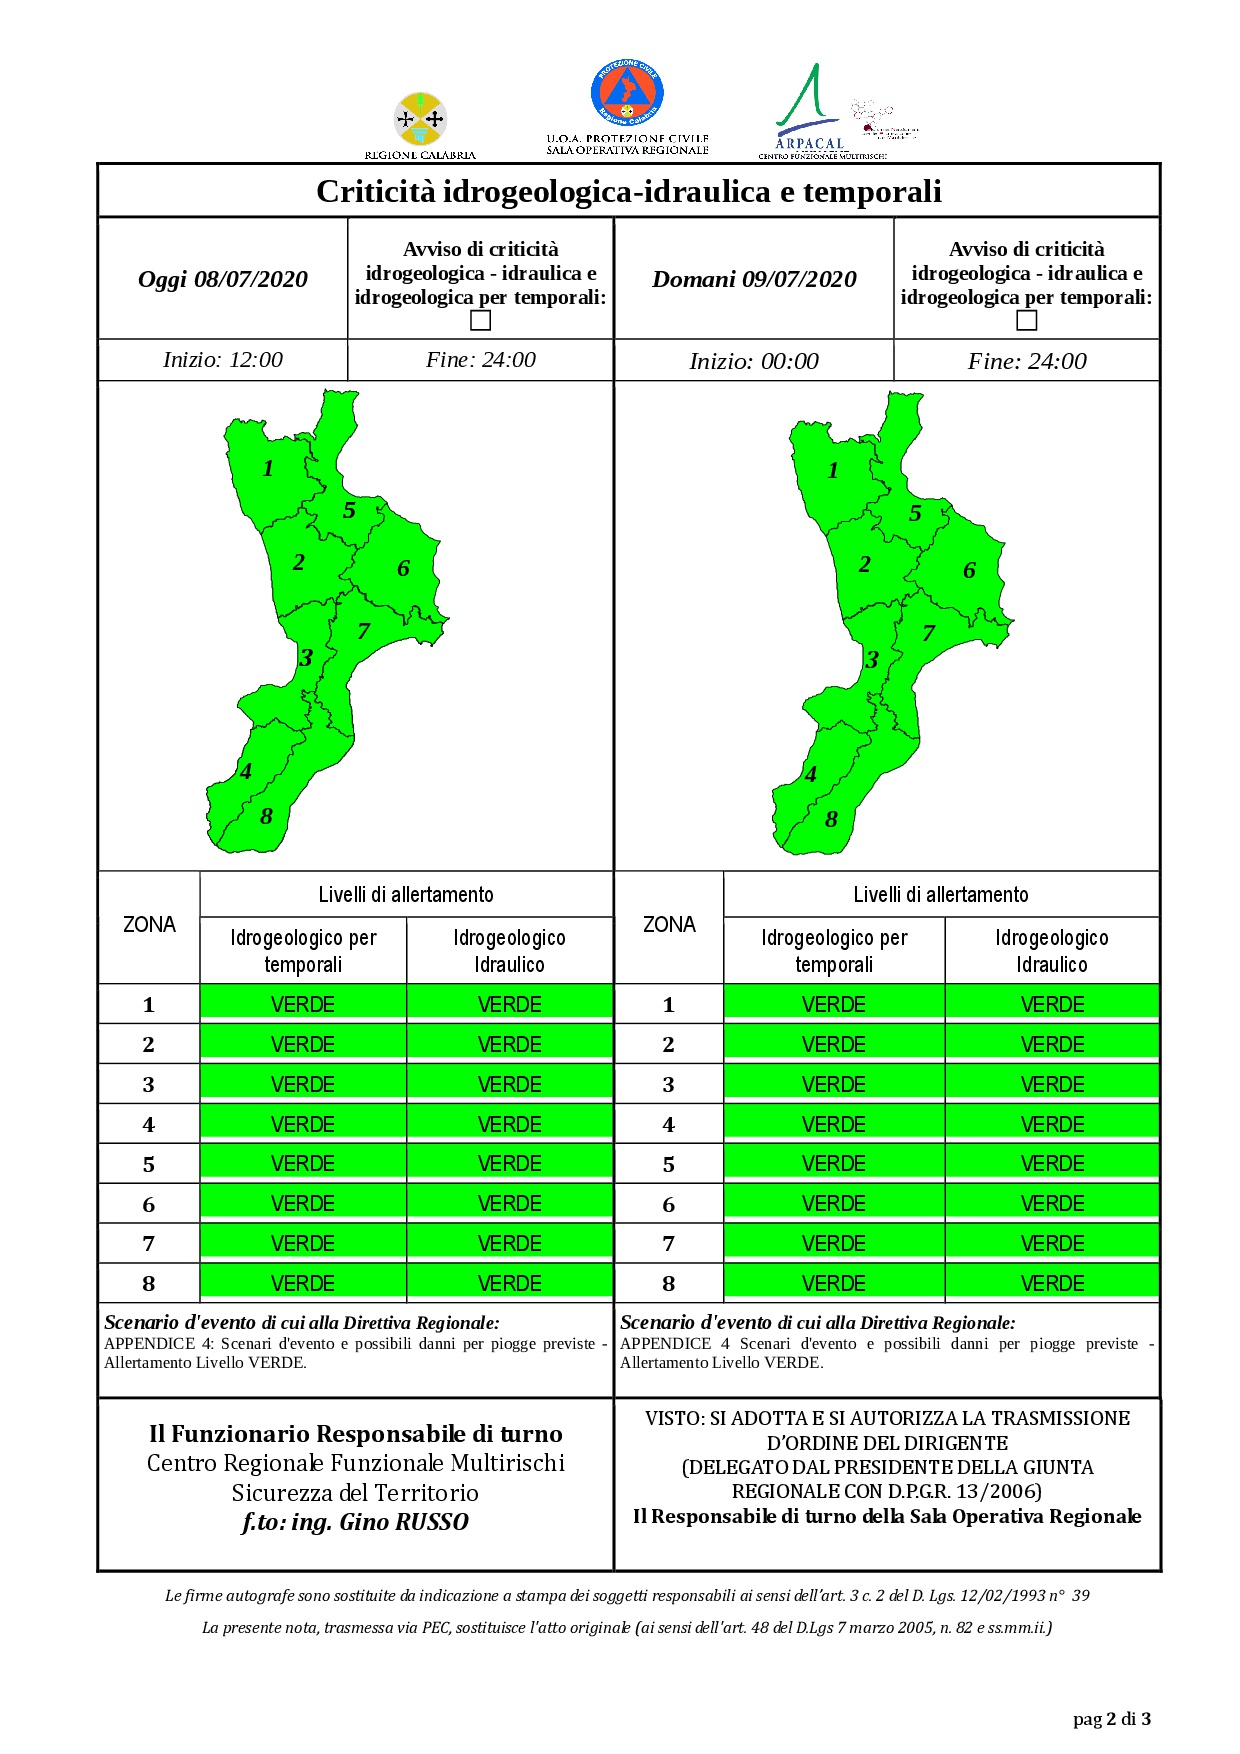 Criticità idrogeologica-idraulica e temporali in Calabria 08-07-2020